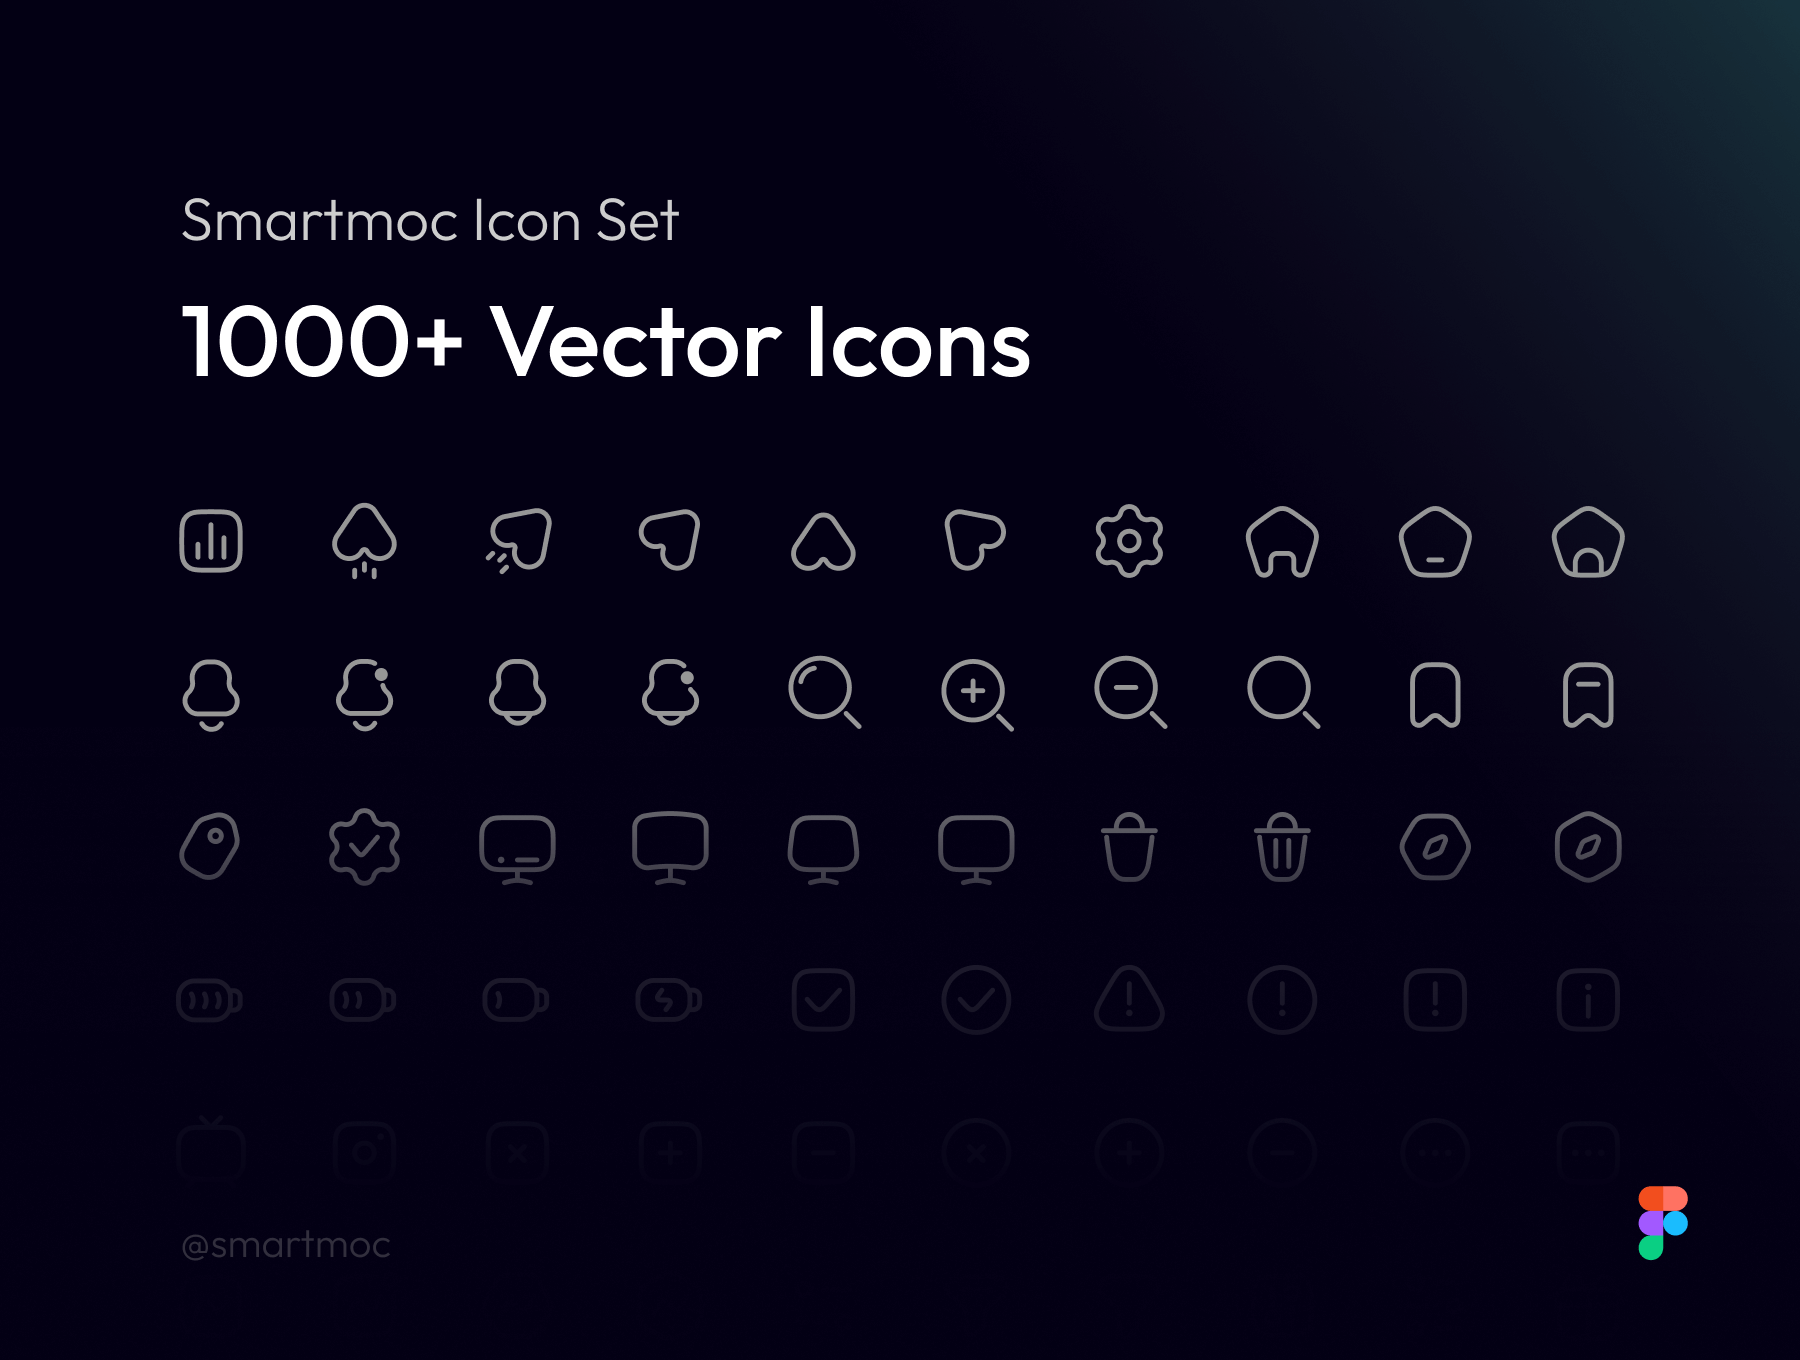 线性图标模板素材下载Smartmoc Icon Set 1,000+ Icons插图